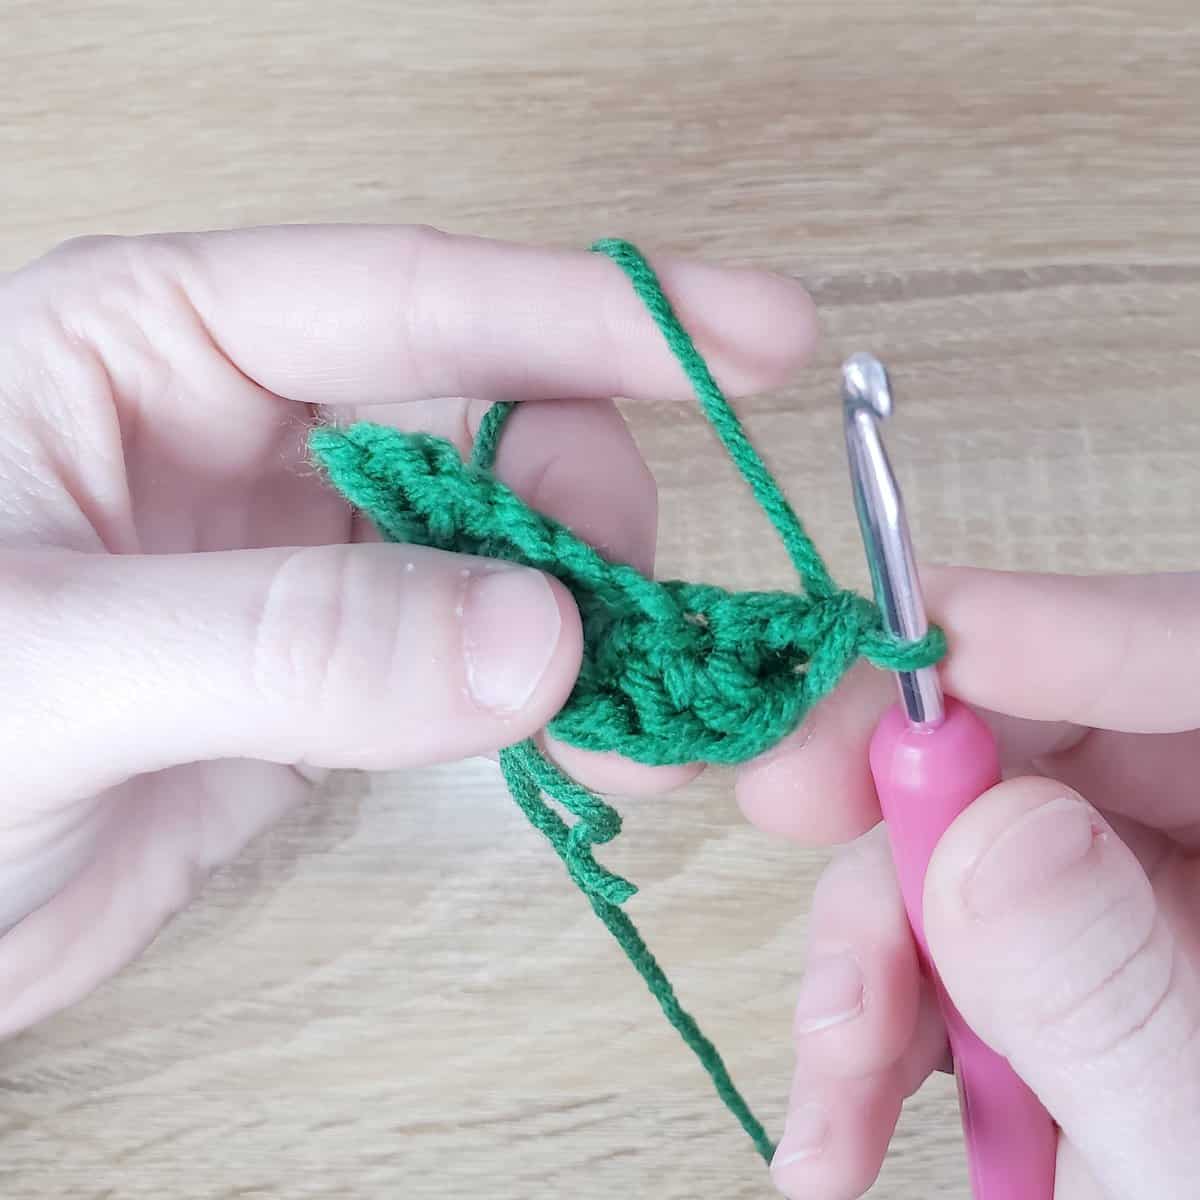 5 double crochet stitches